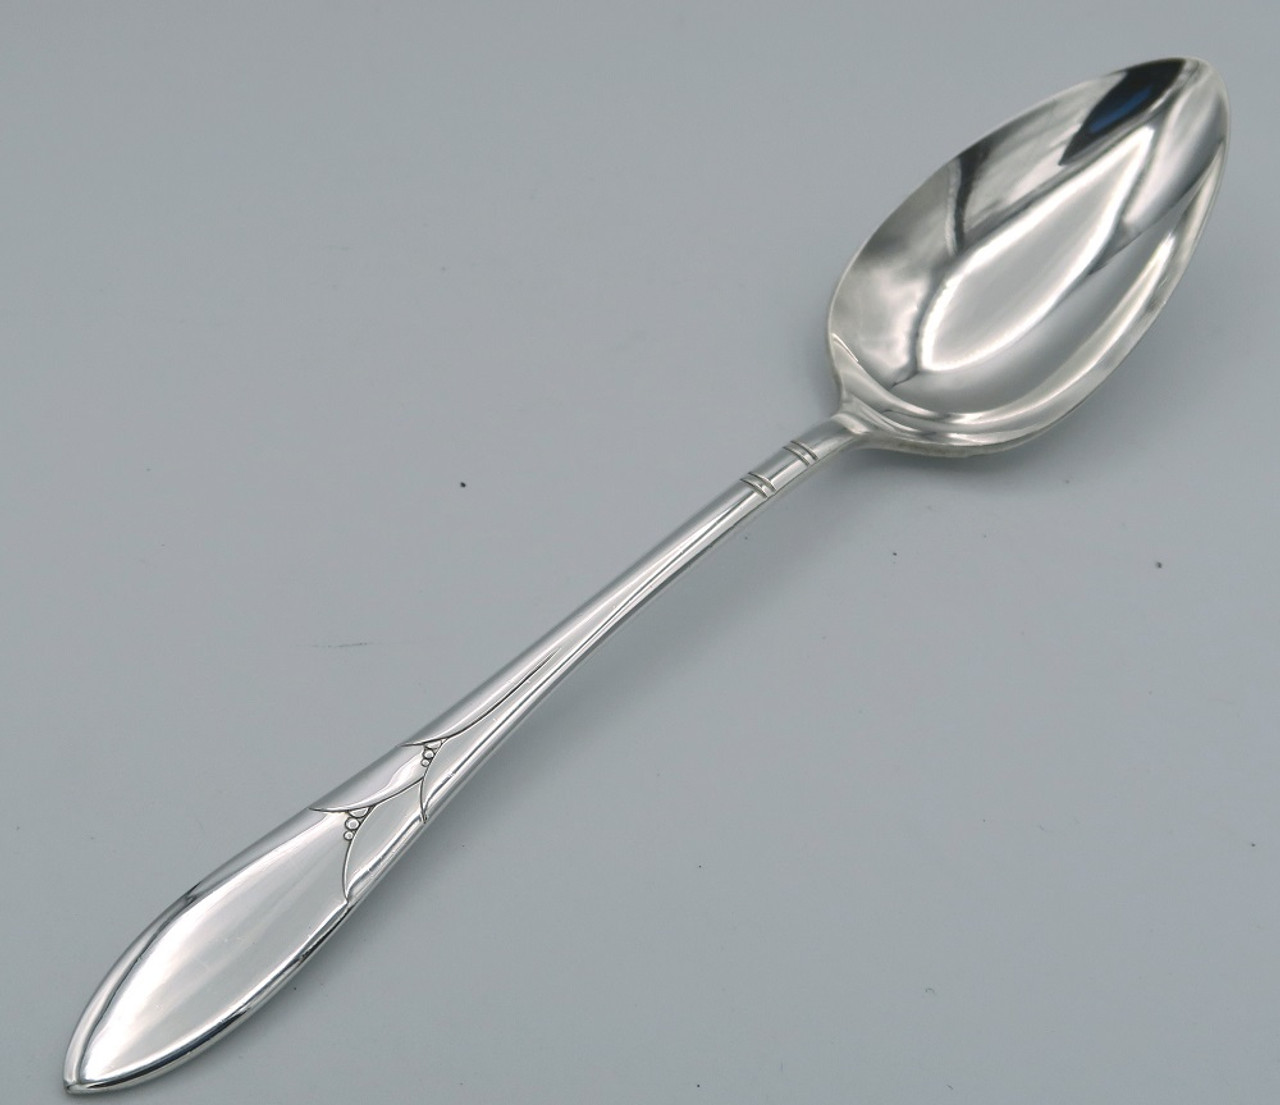 Medium Oval Spoon in Granadillo